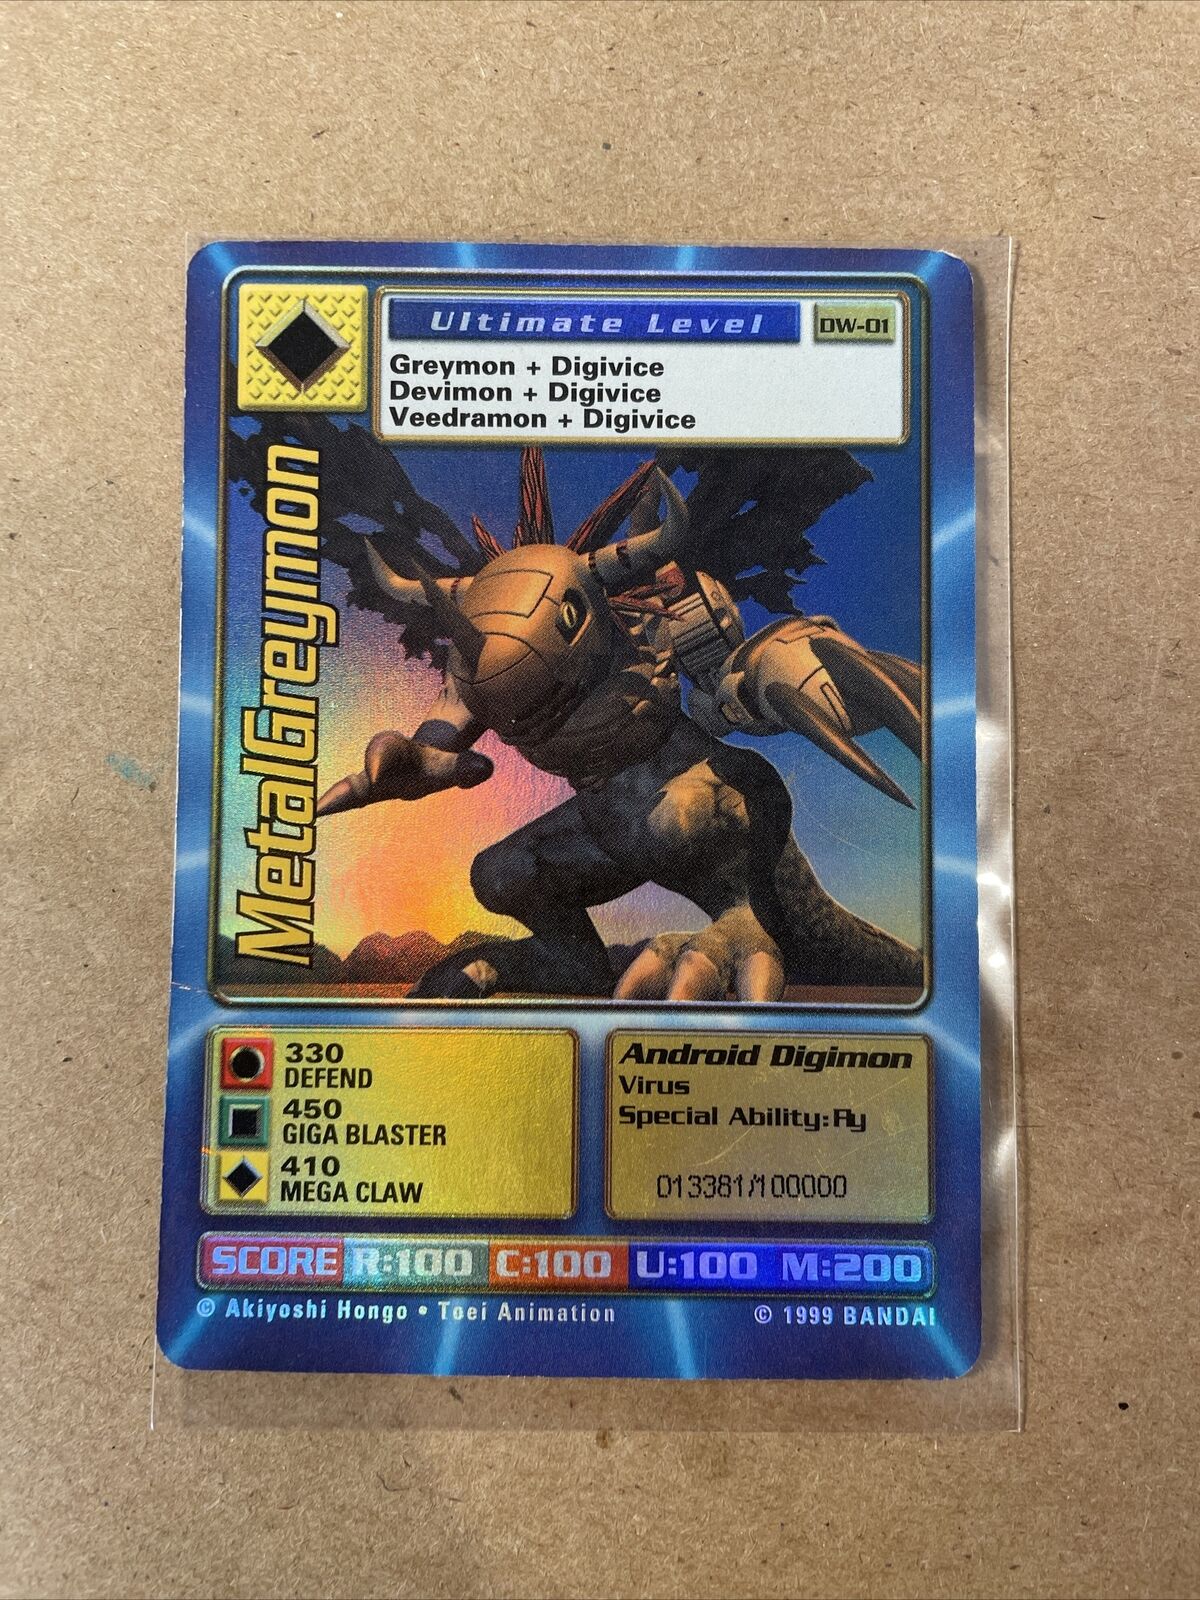 Digimon World PlayStation Promo DW-01 MetalGreymon - number 013381 / 100,000